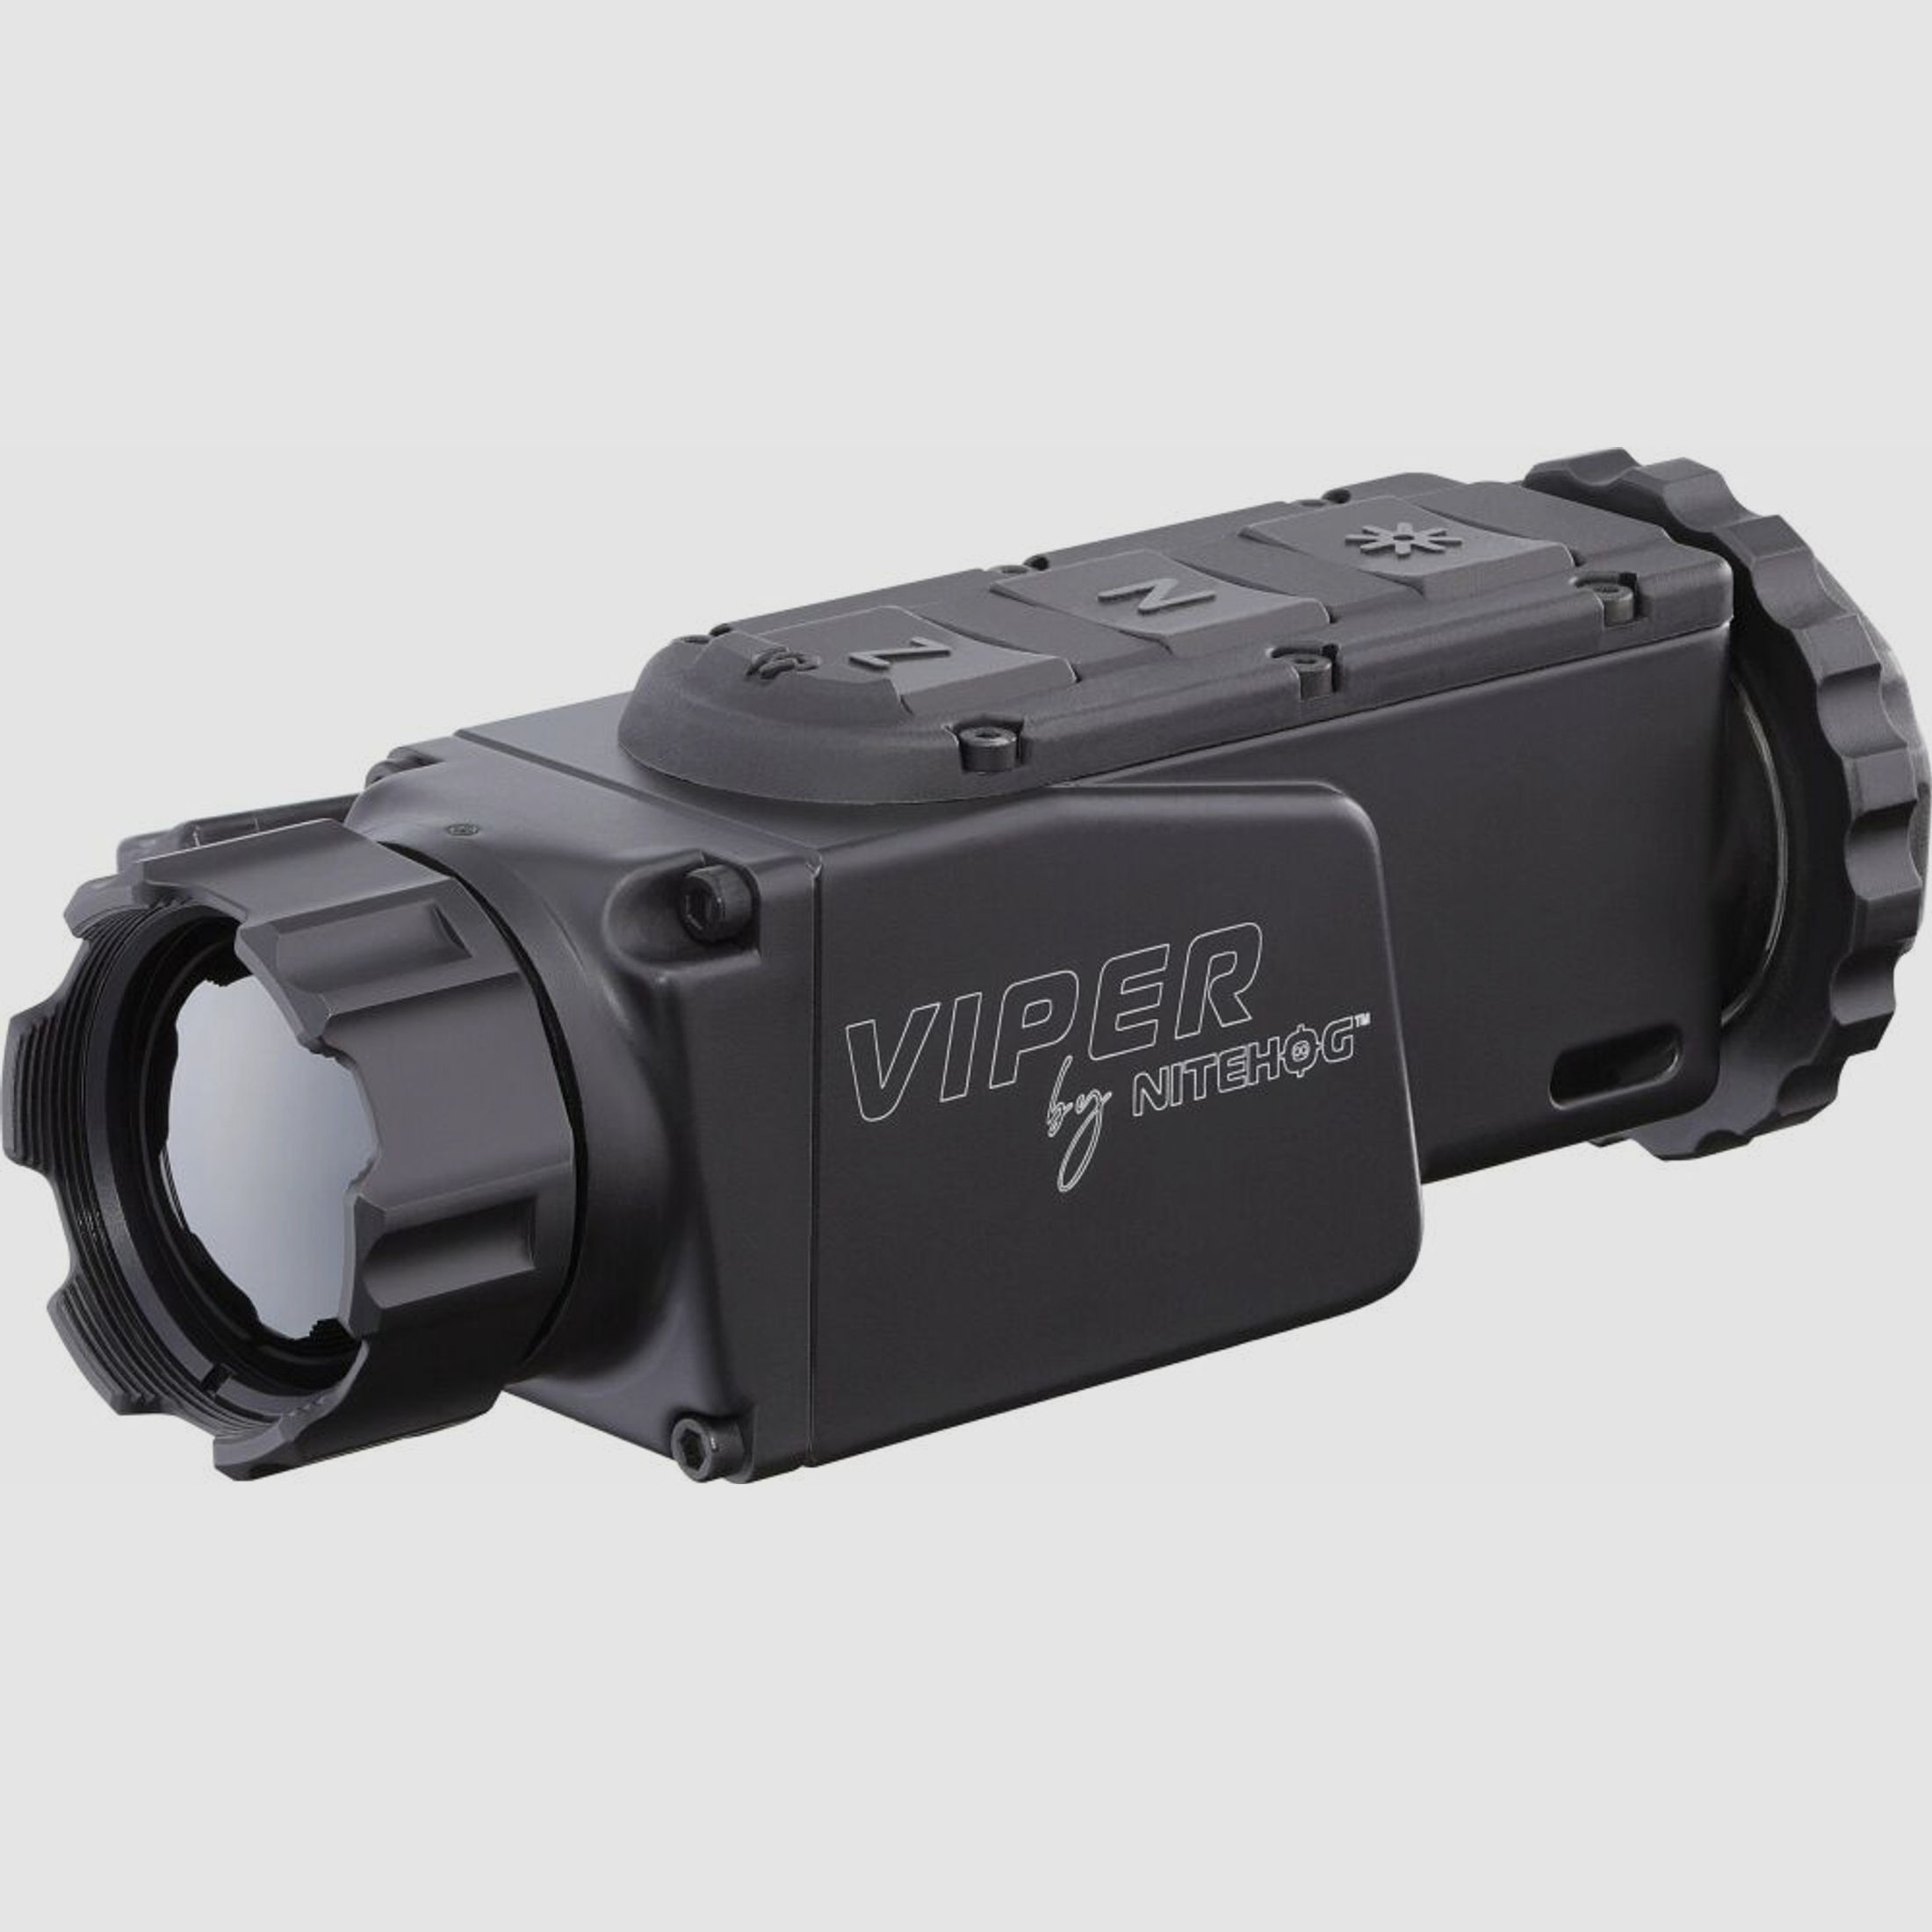 Nitehog	 TIR-M35 XC Viper - Abverkauf